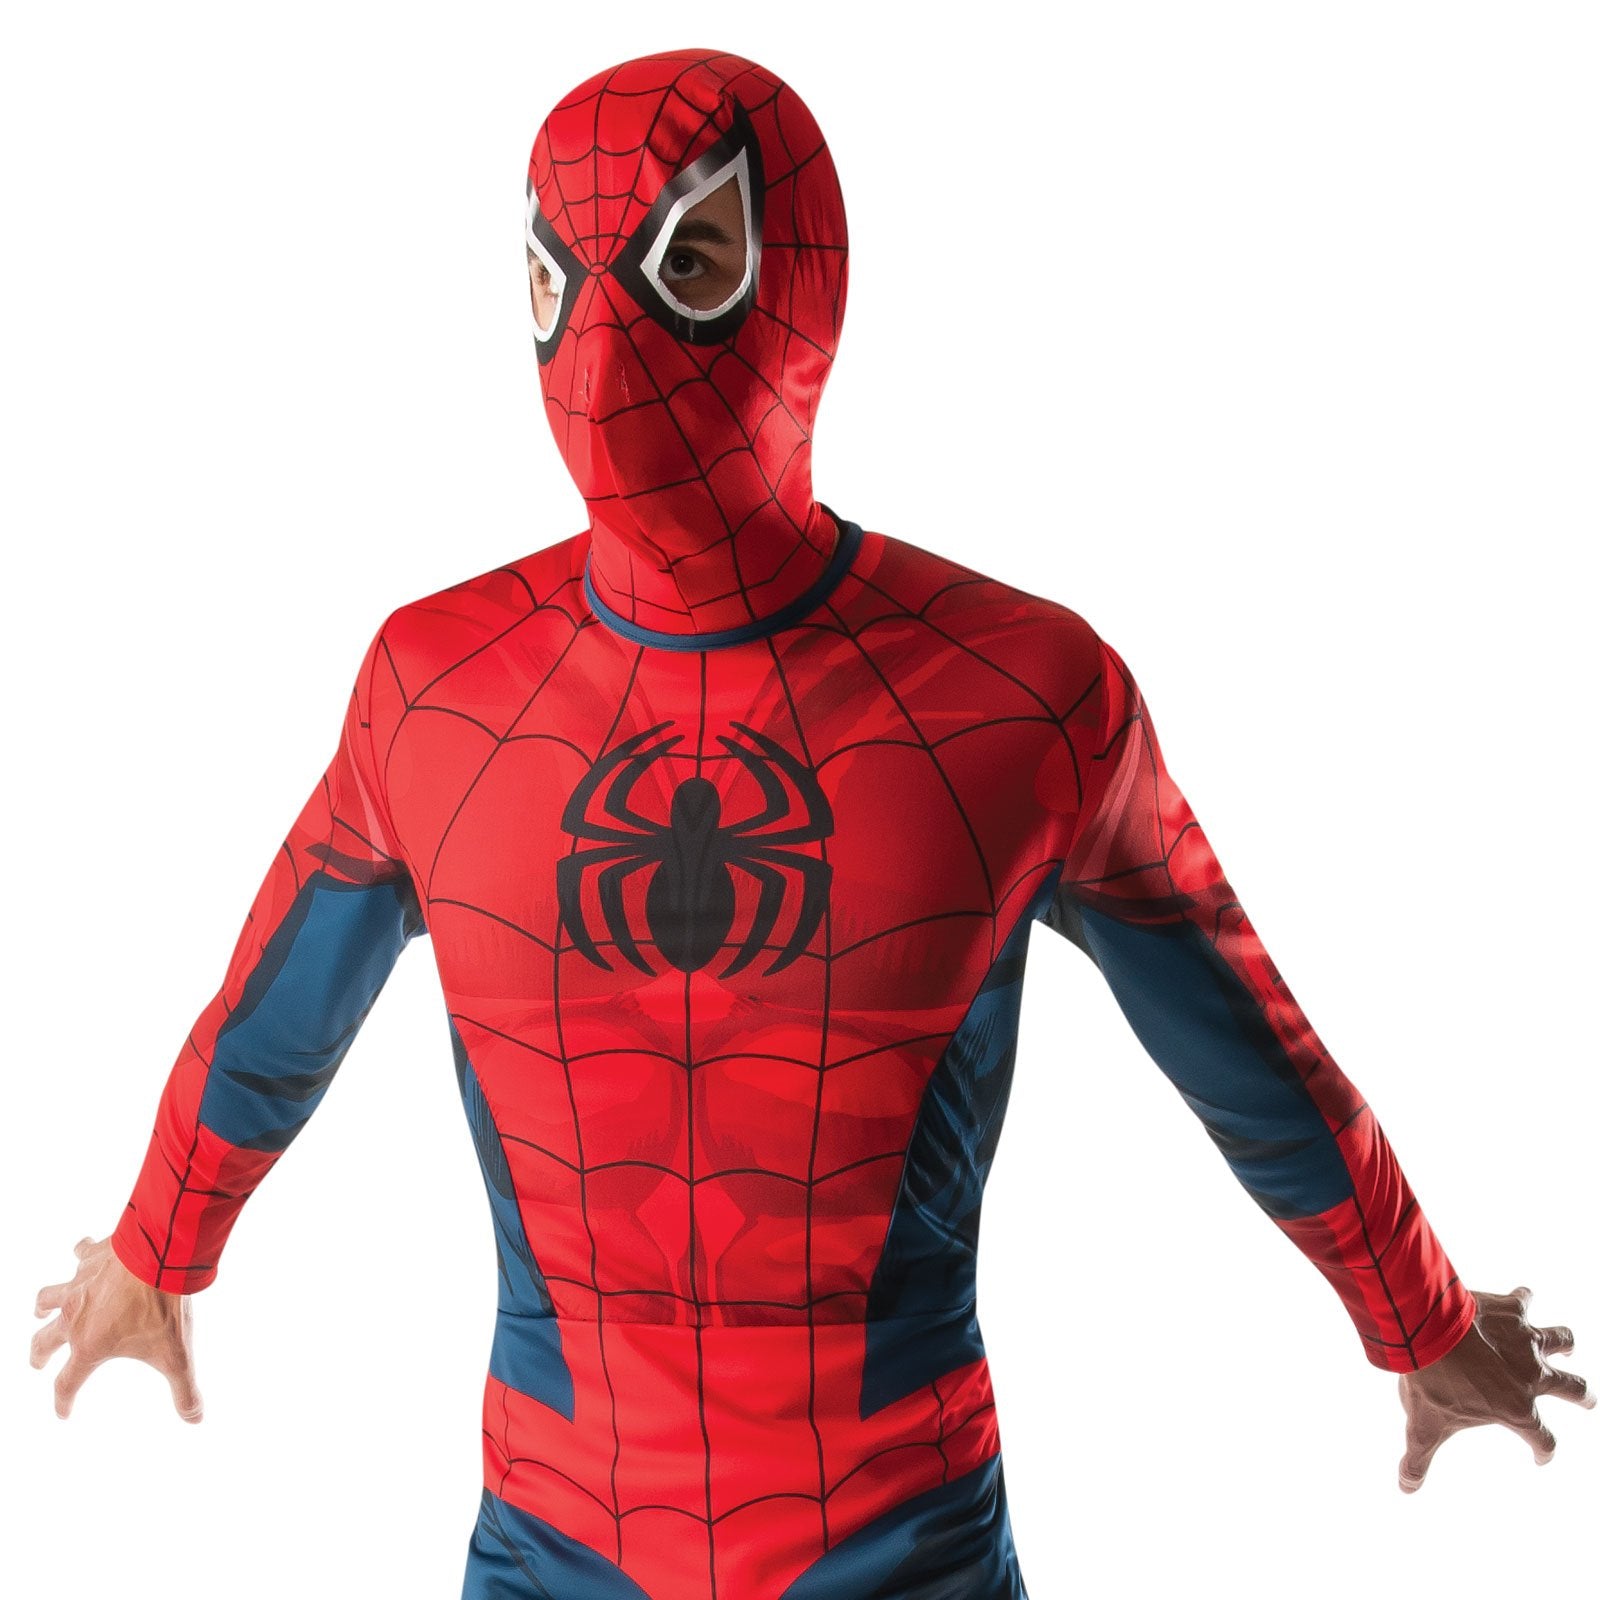 Costume Adult Spider Man Deluxe